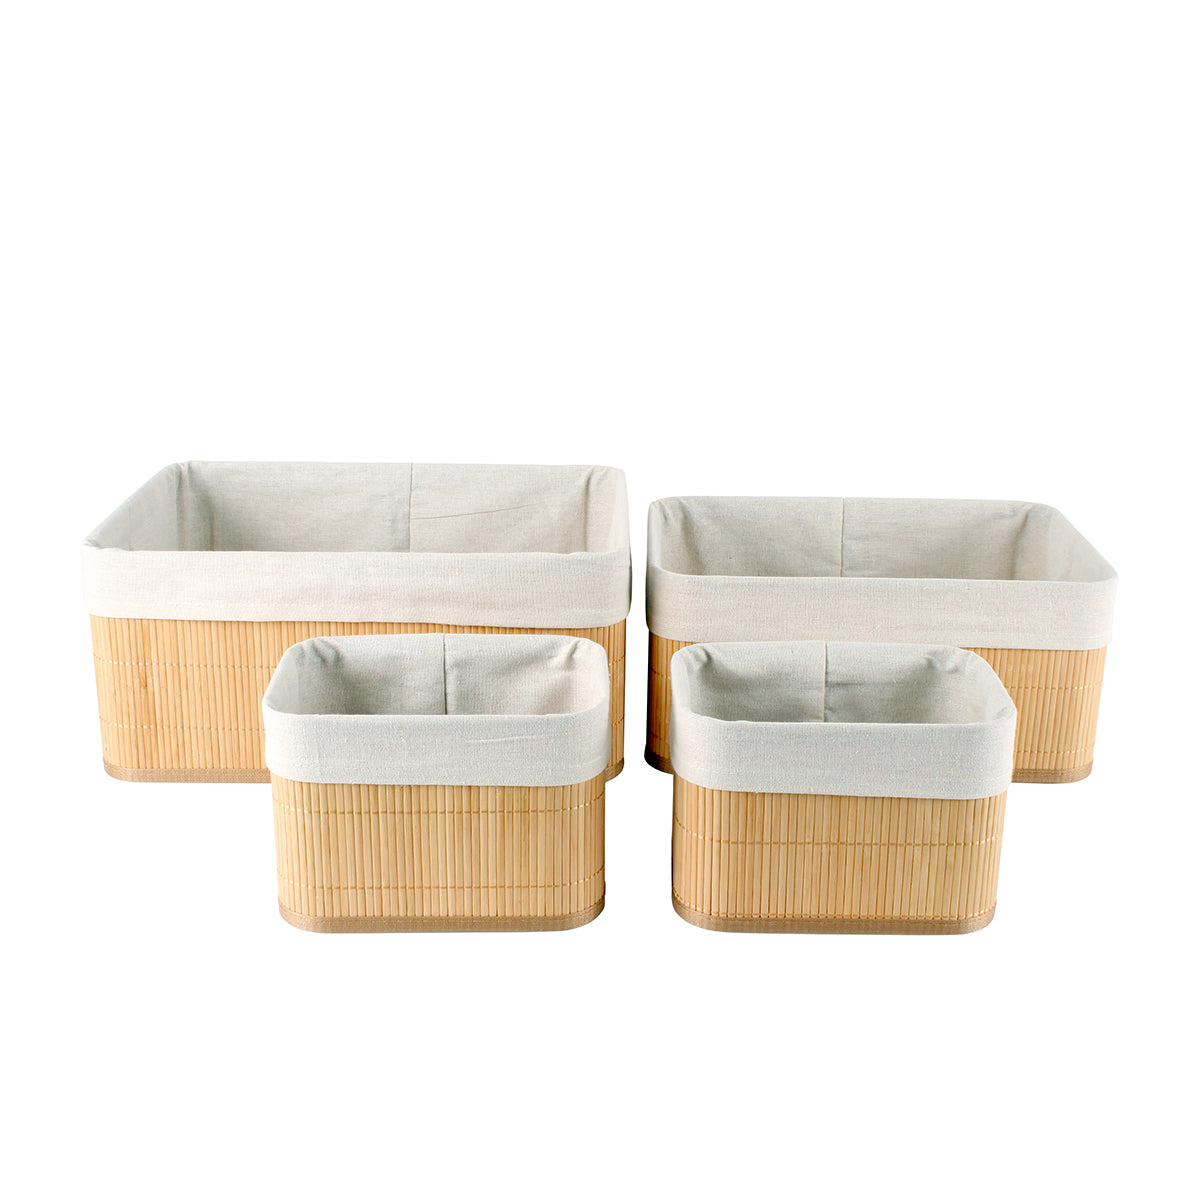 Kalib Set Of 4 Bamboo Storage Baskets With Lining